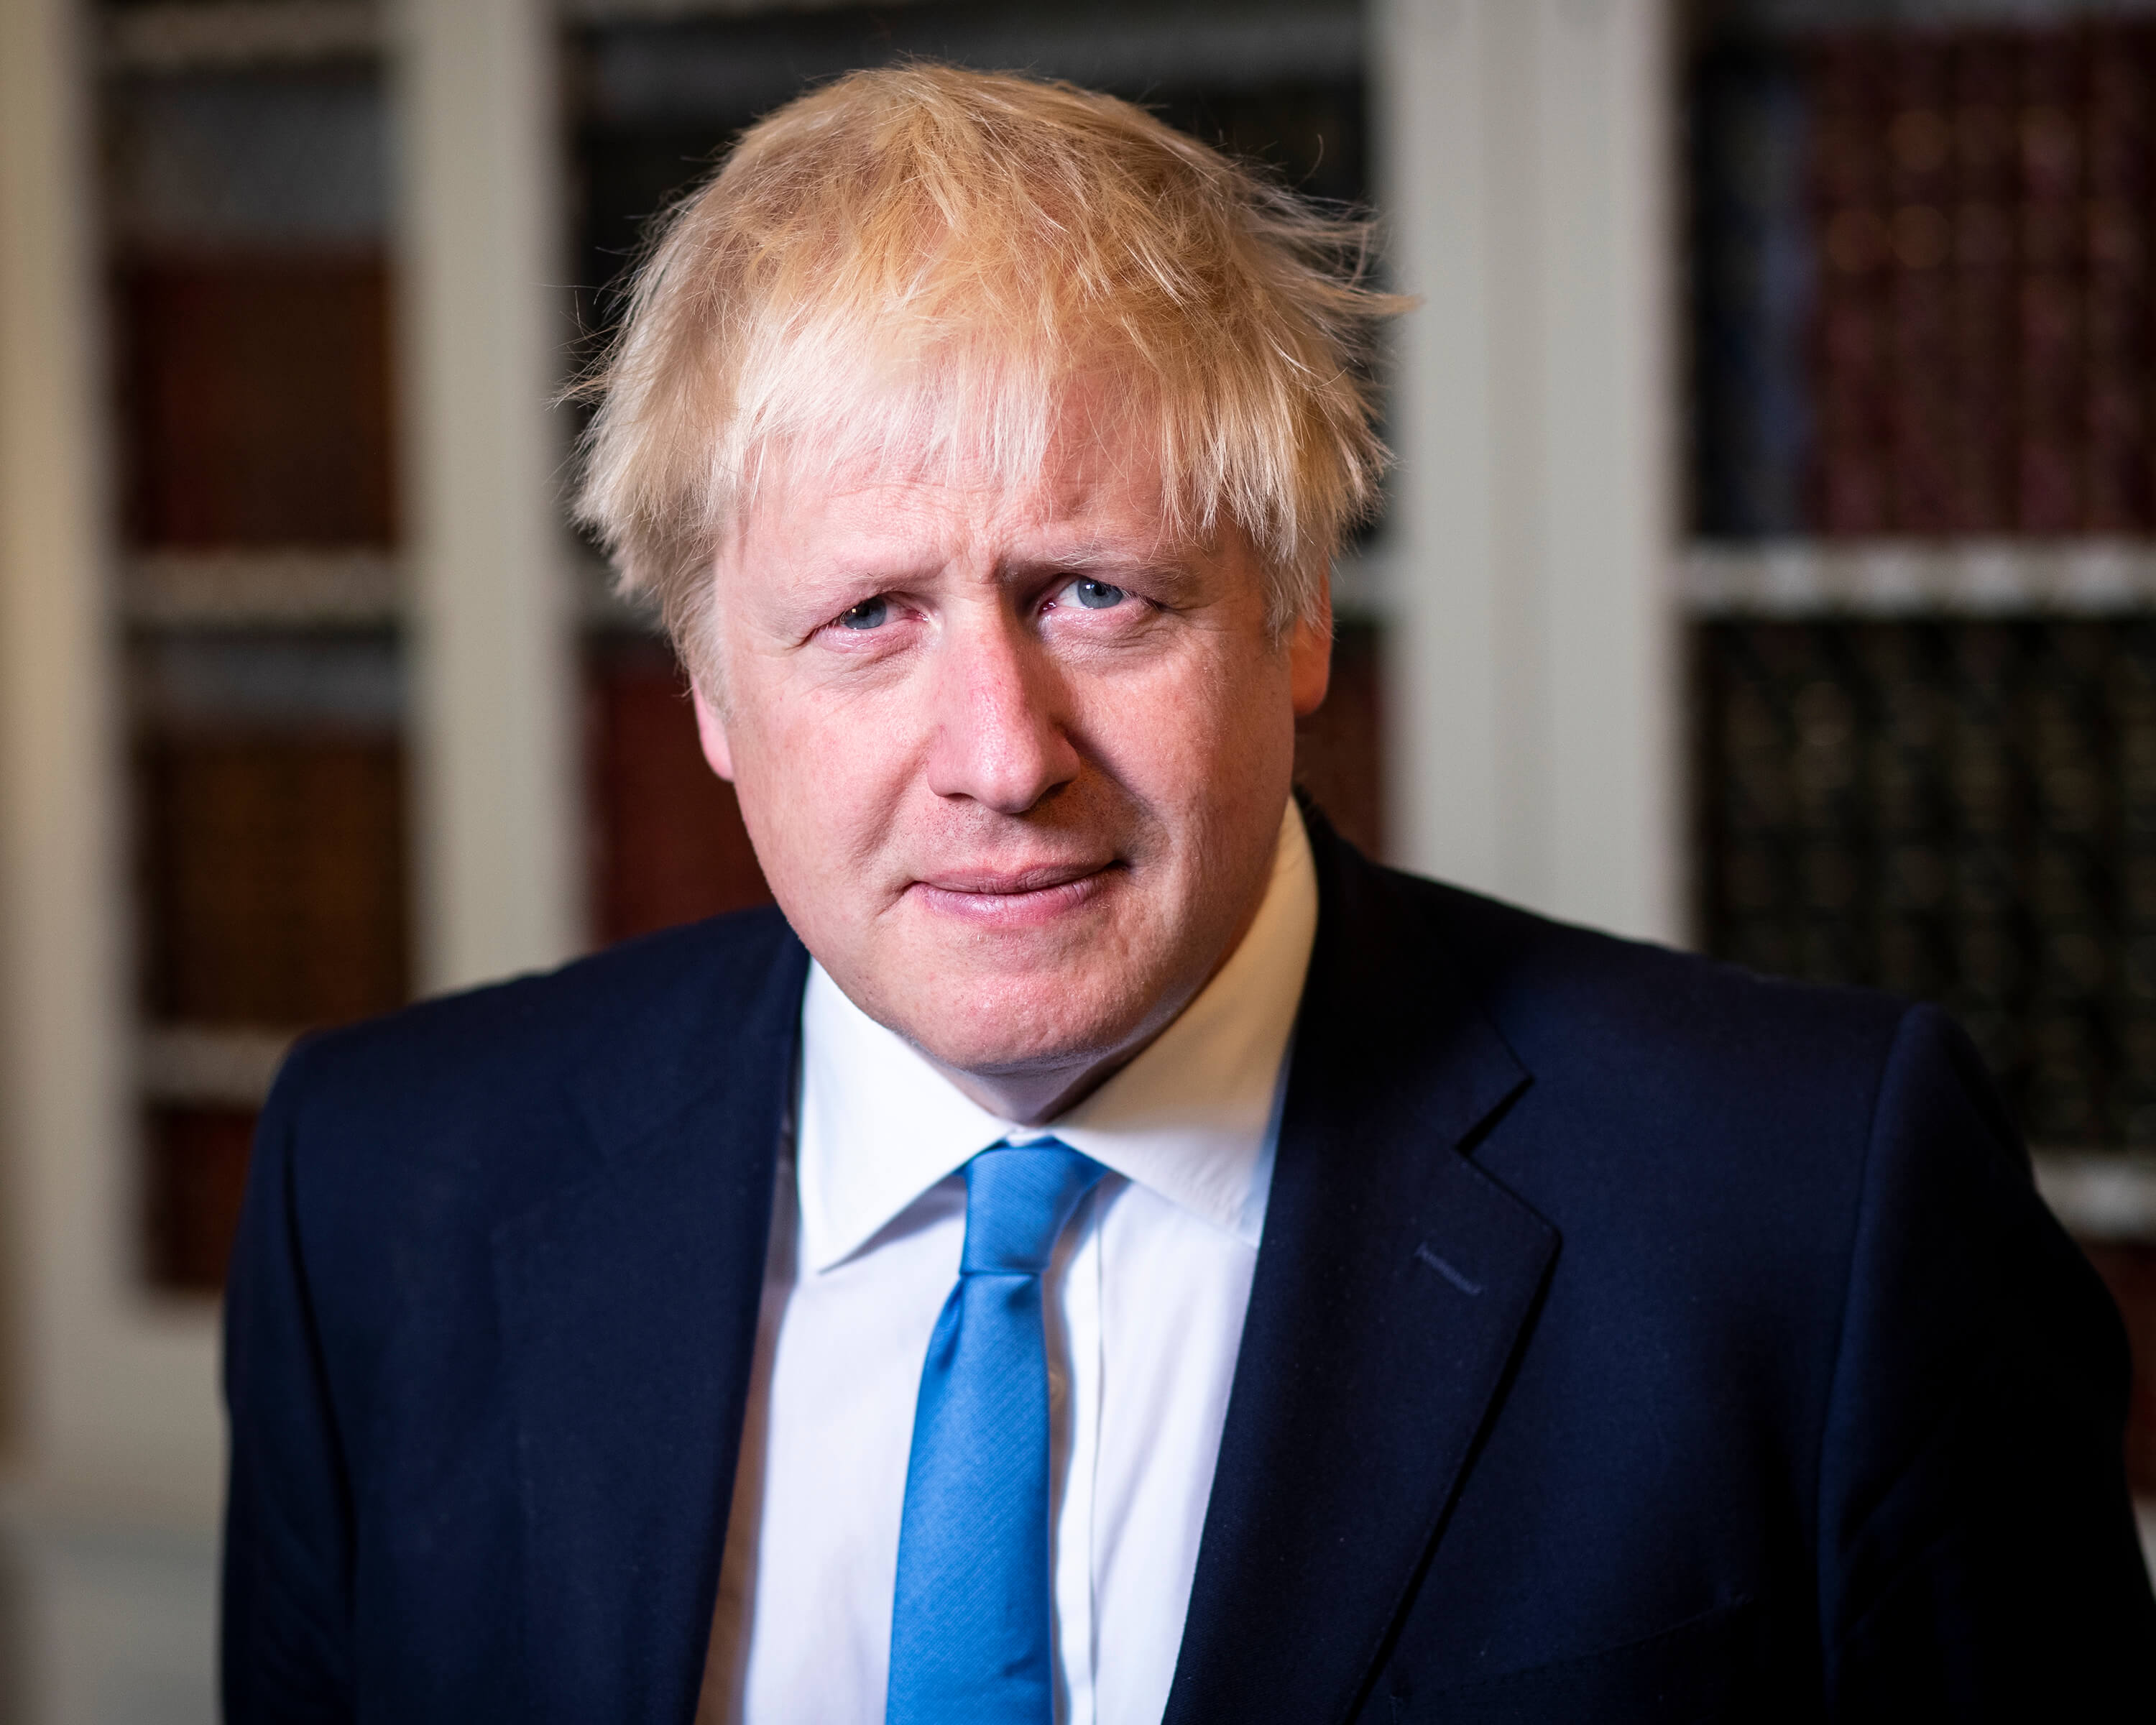 Boris Johnson. Credit: UK Prime Minister's office